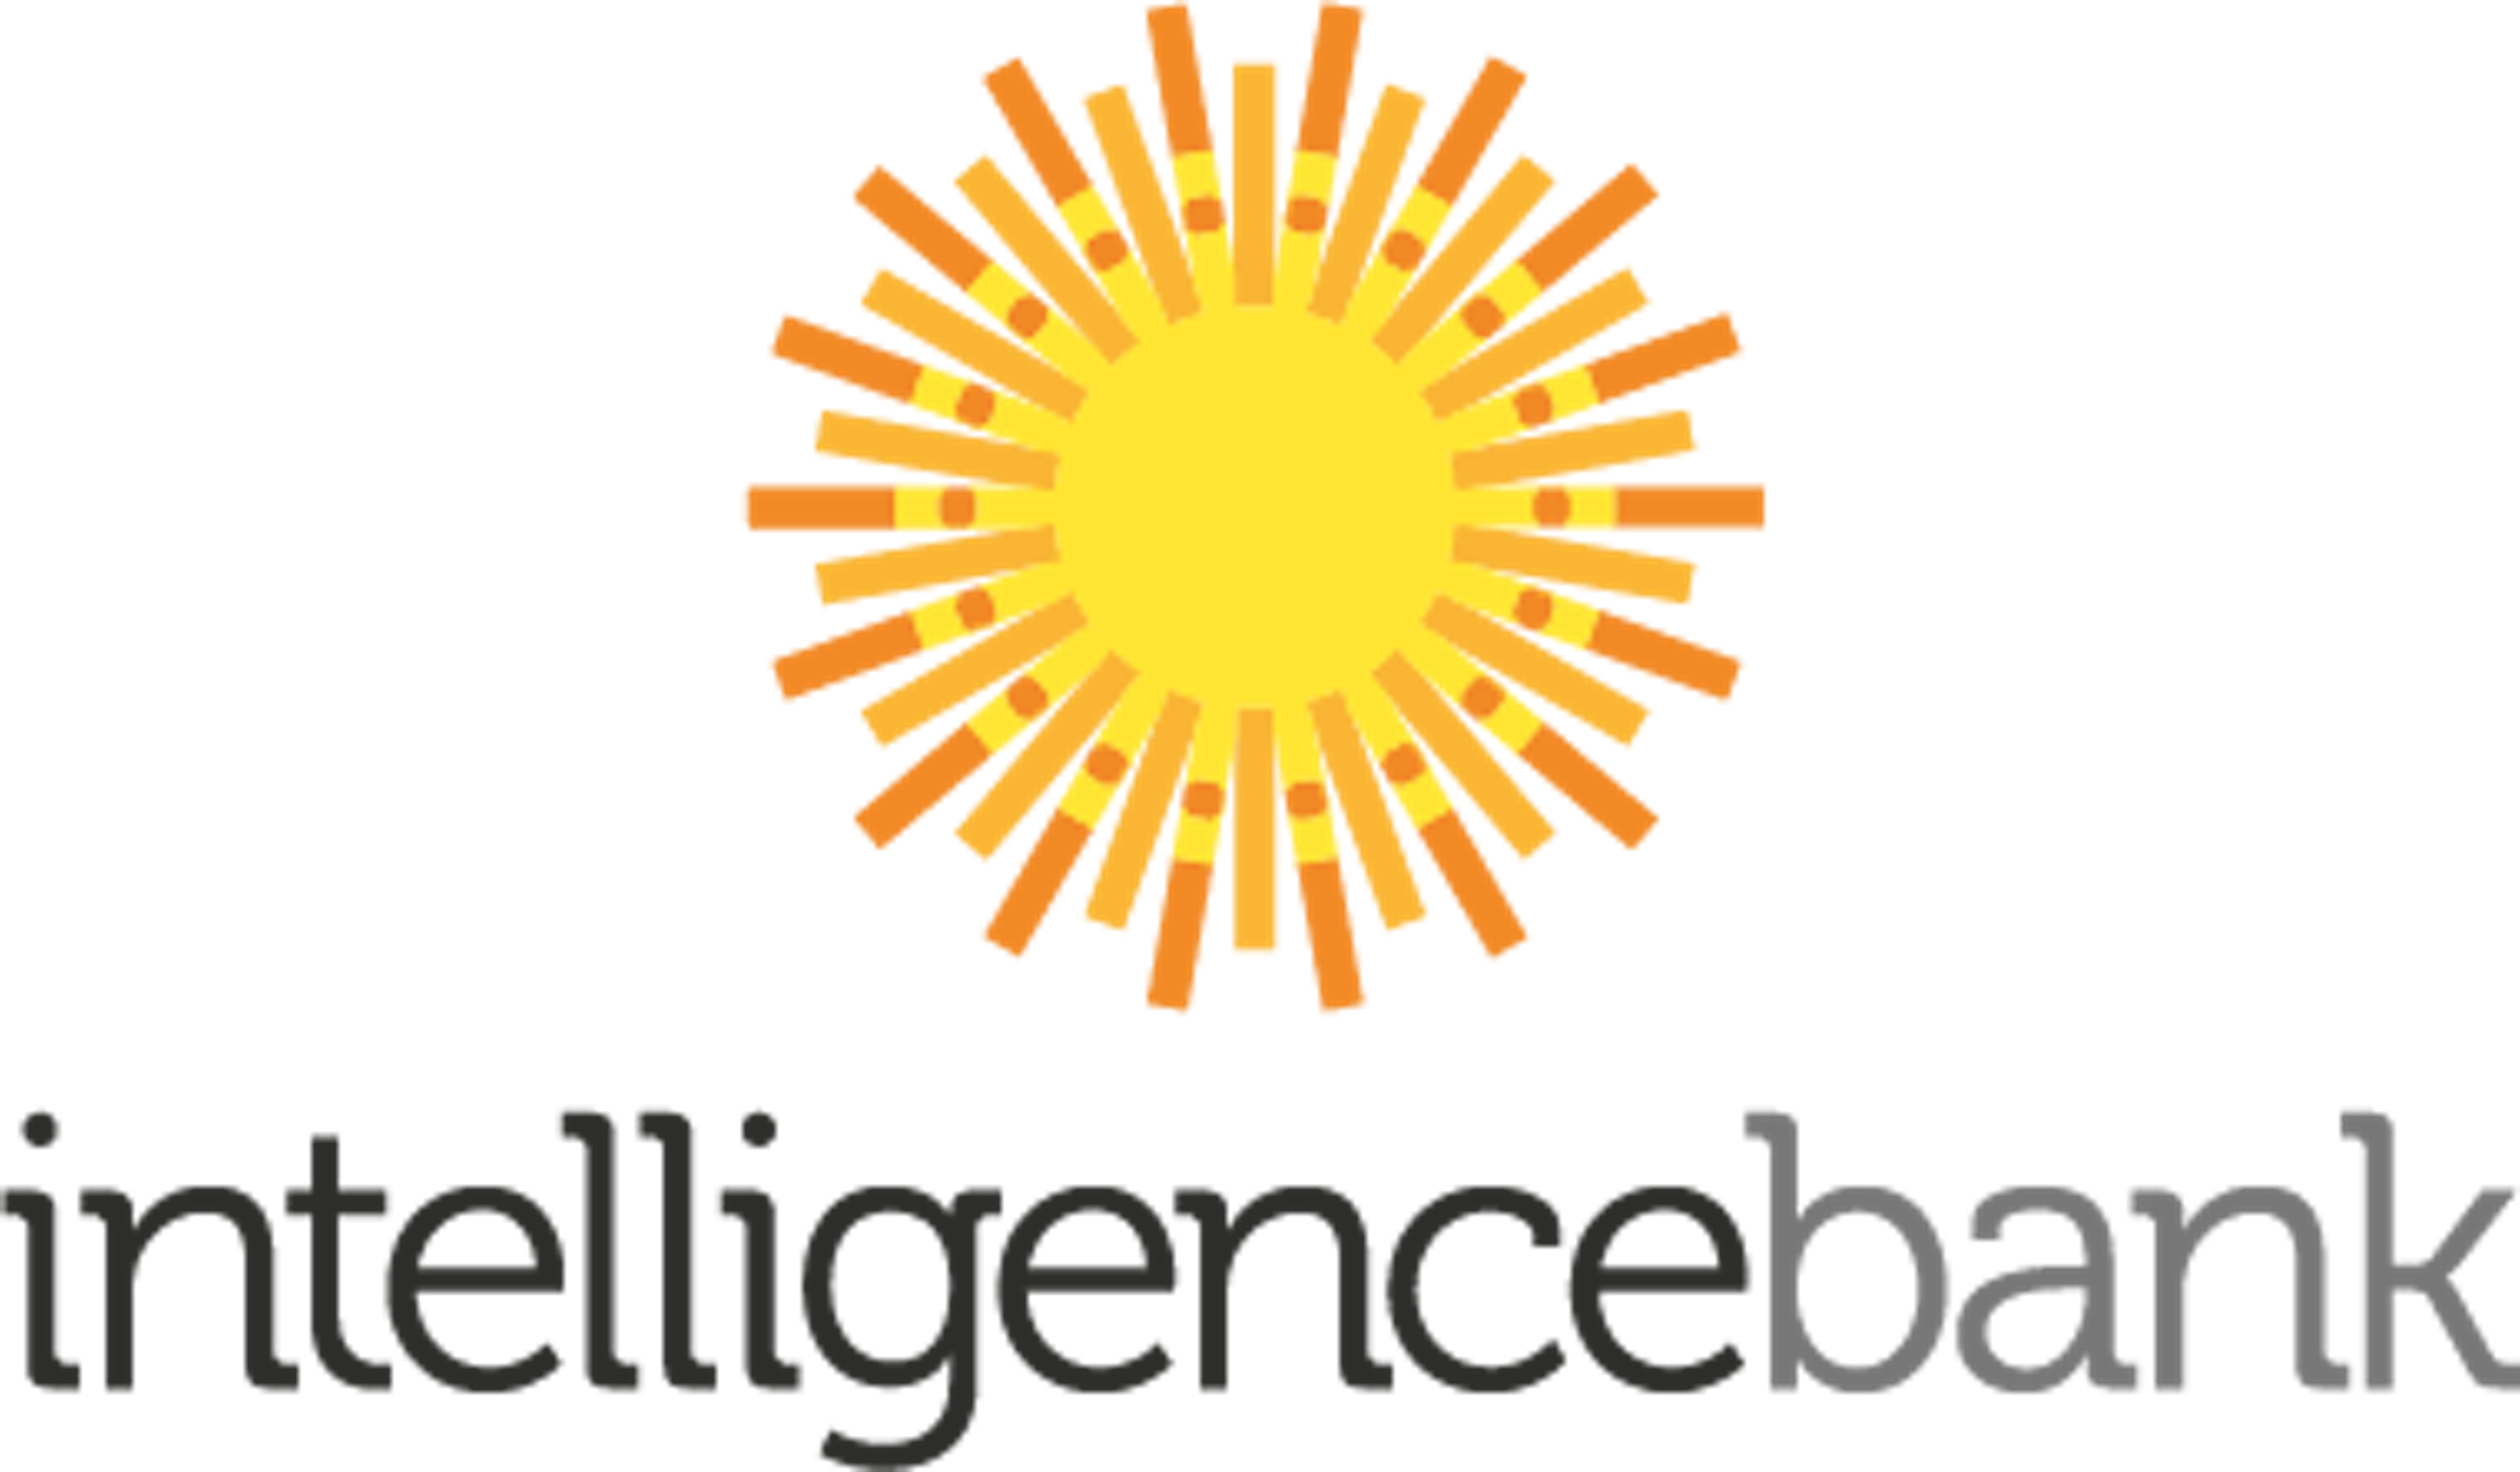 IntelligenceBank Logo